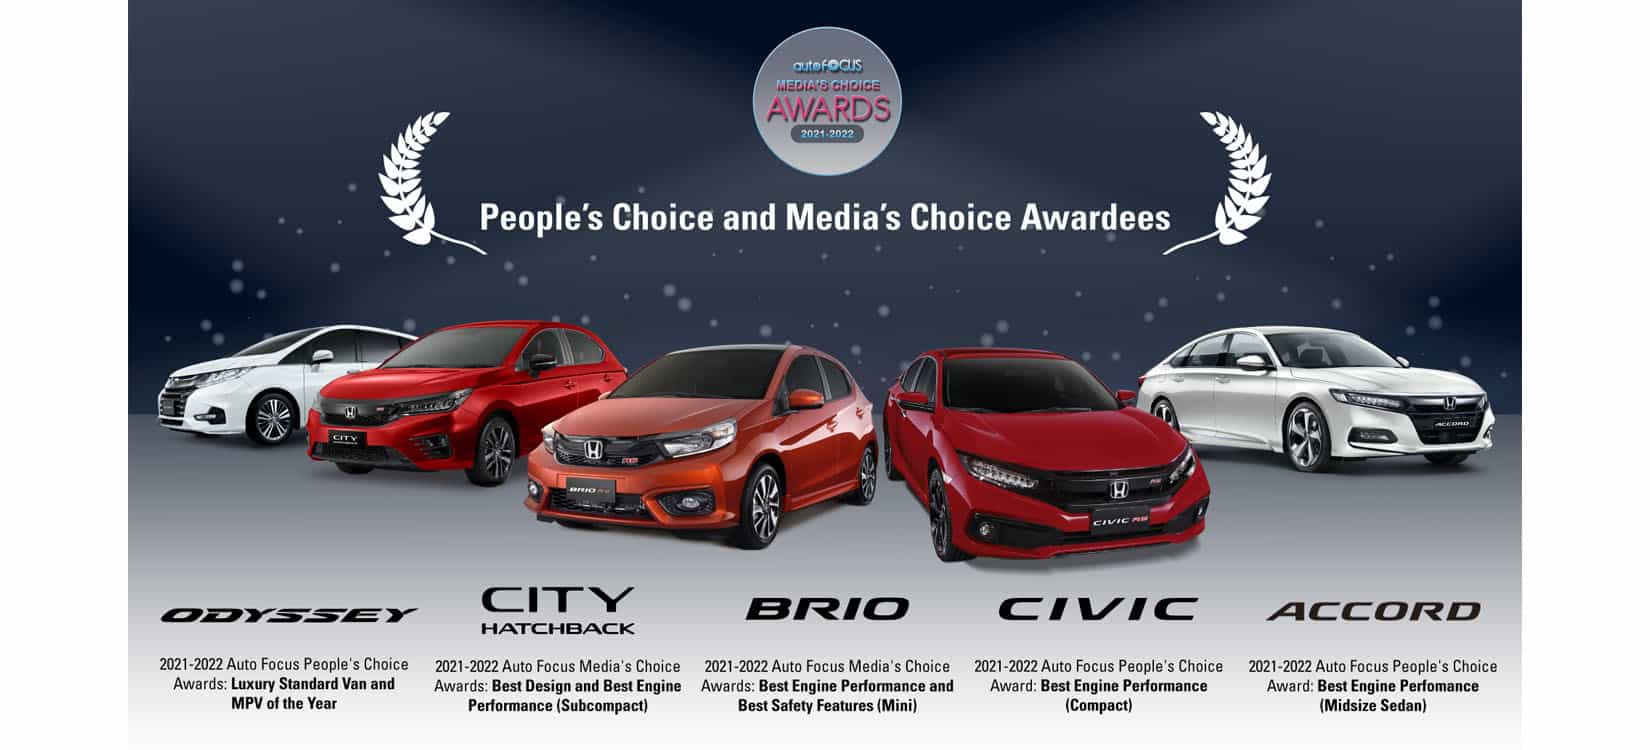 Honda Cars Philippines, Inc. Bags 7 Wins at STV 2021-2022 Autofocus People’s & Media’s Choice Awards